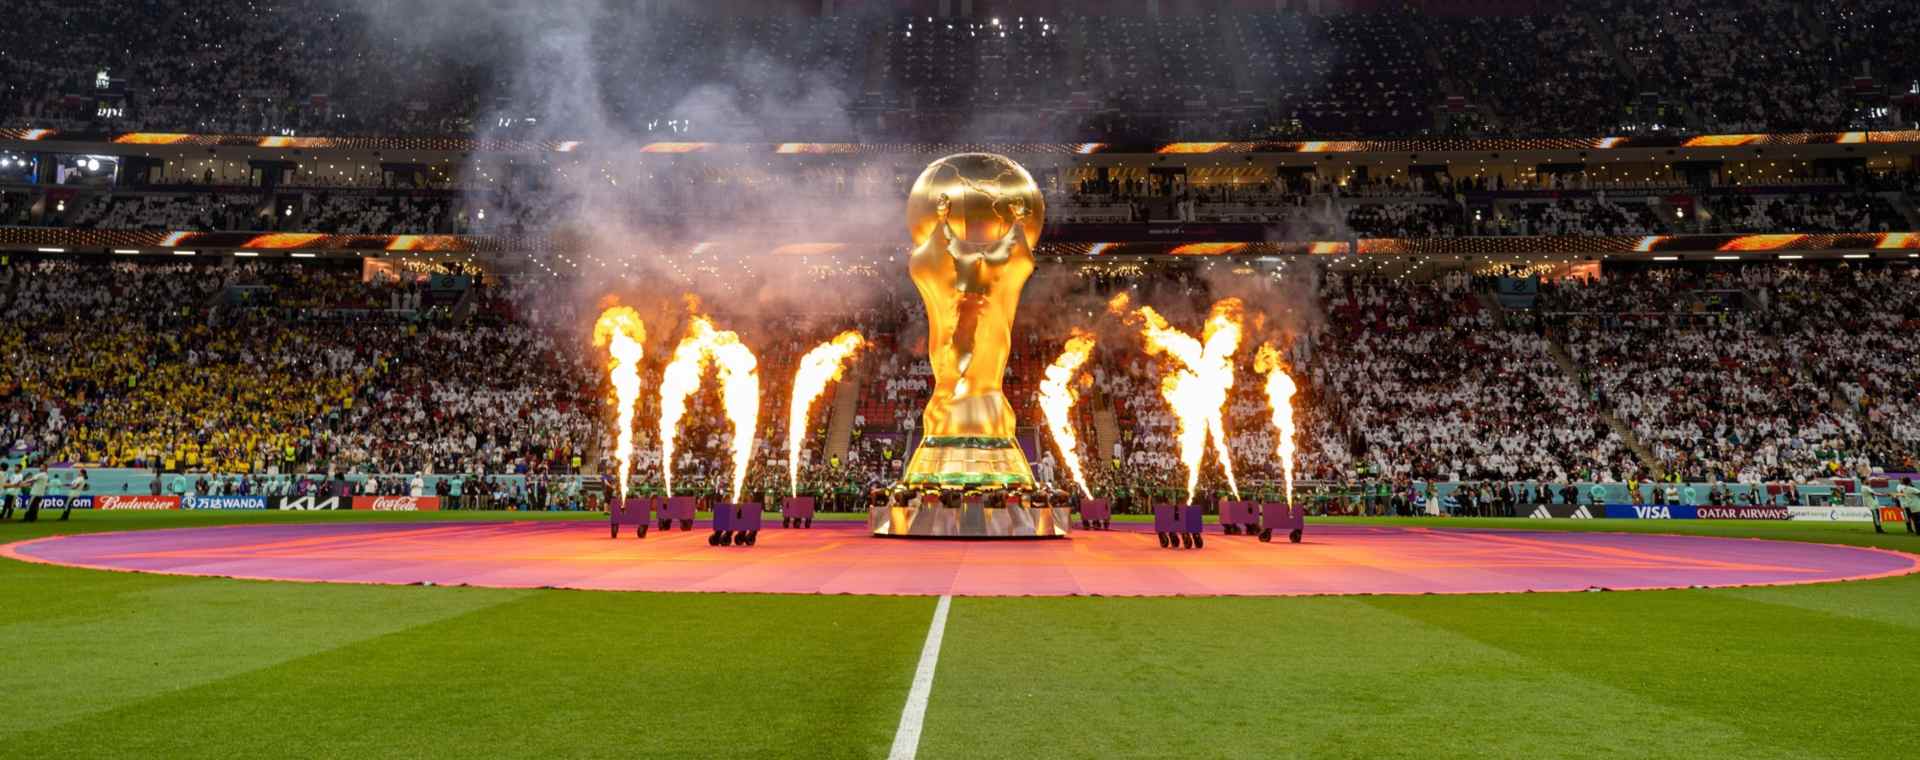 Kembang api mengelilingi patung Piala Dunia menjelang pertandingan pembukaan Piala Dunia 2022 antara tuan rumah Qatar dan Ekuador, di Stadion Al Bayt di Al Khor, Qatar, pada hari Minggu, 20 November 2022.  - Bloomberg. Bursa Taruhan Juara Piala Dunia 2022 dari Kacamata Ekonom Global